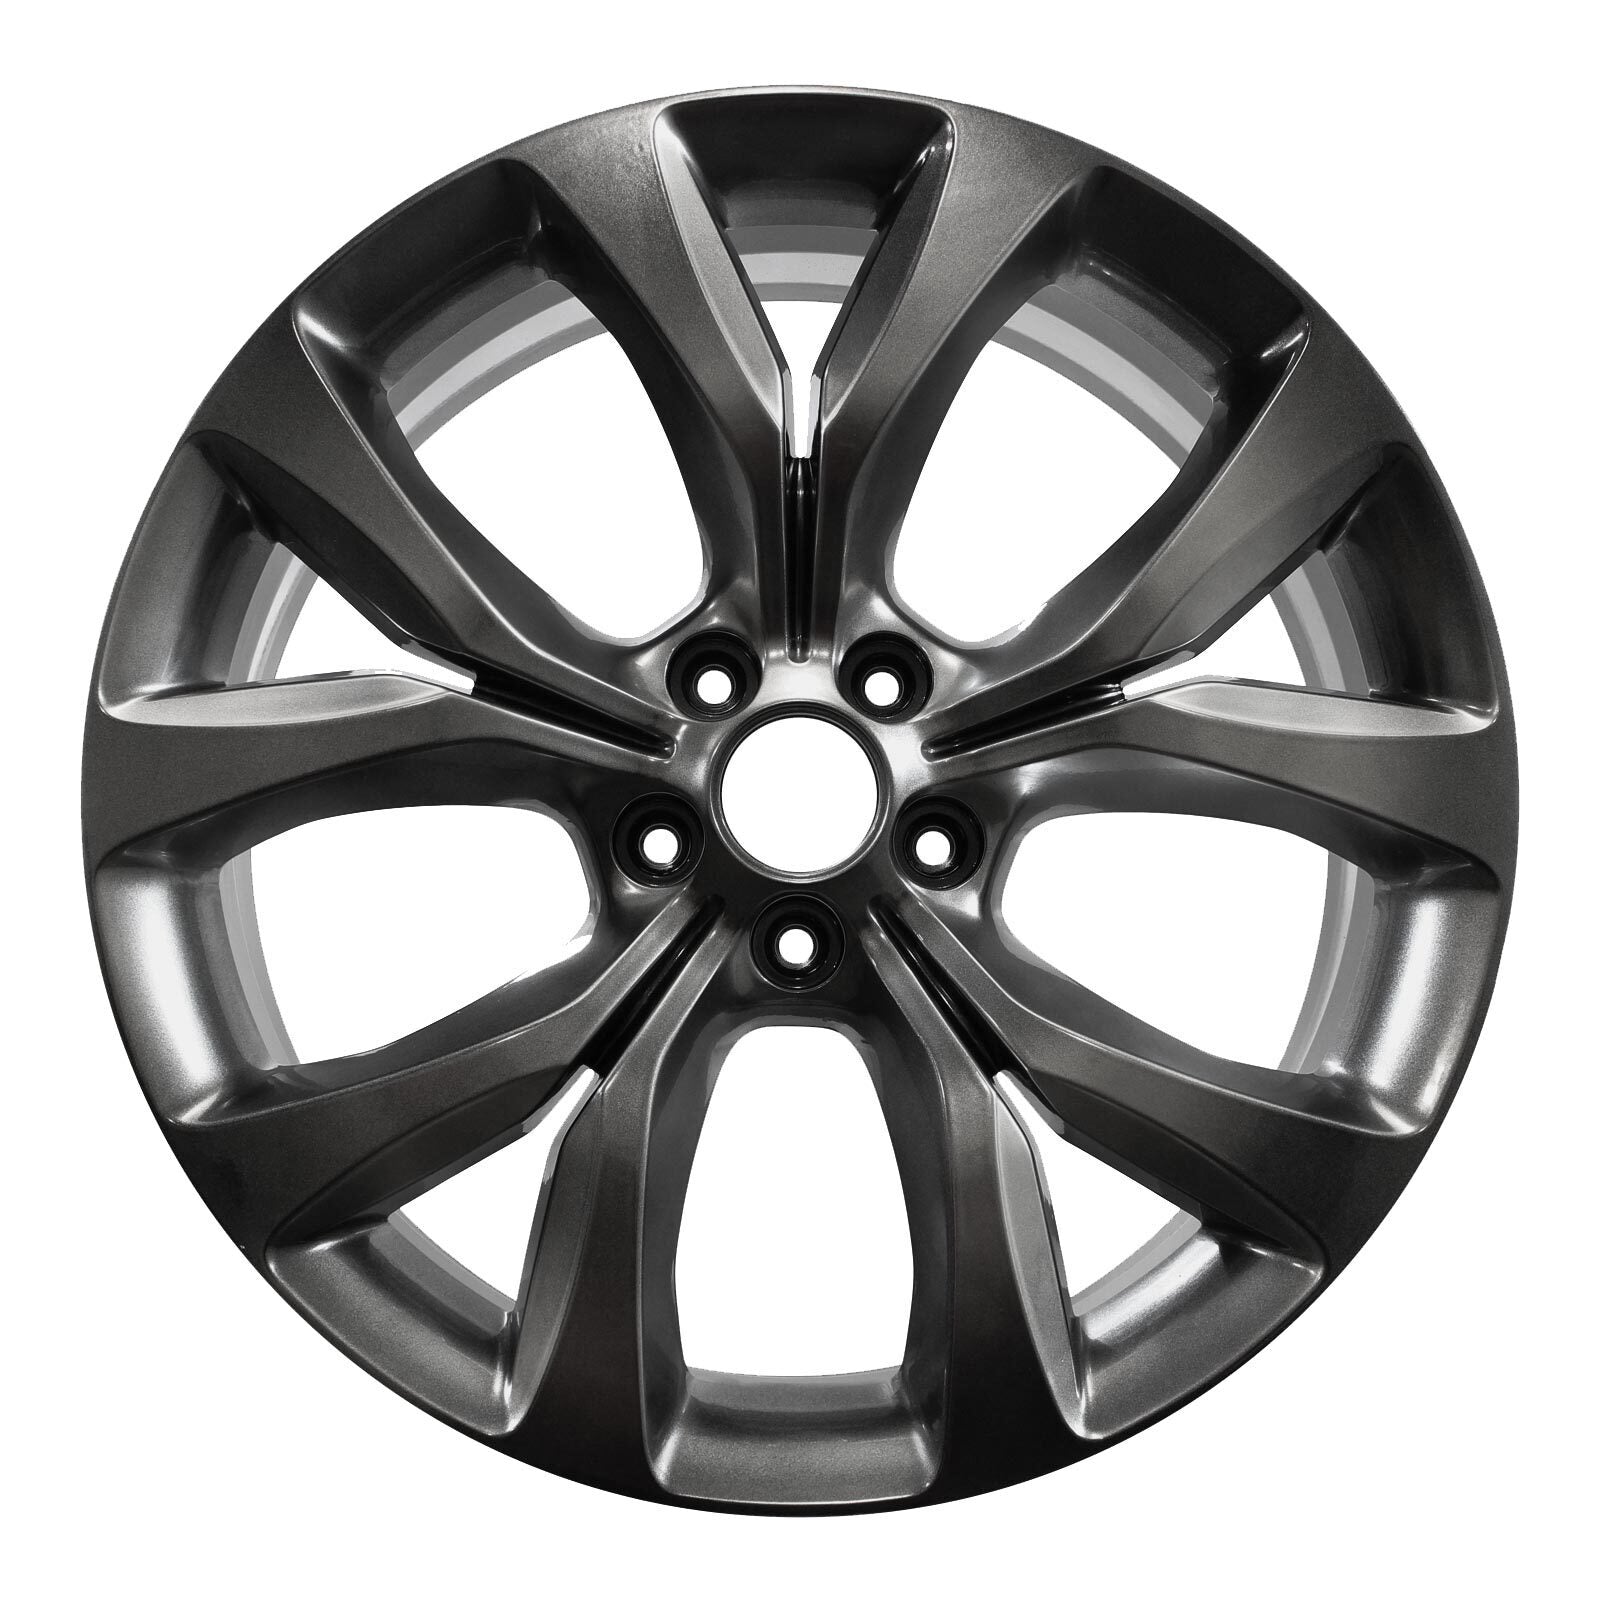 2015 Chrysler 200 New 19" Replacement Wheel Rim RW2517H